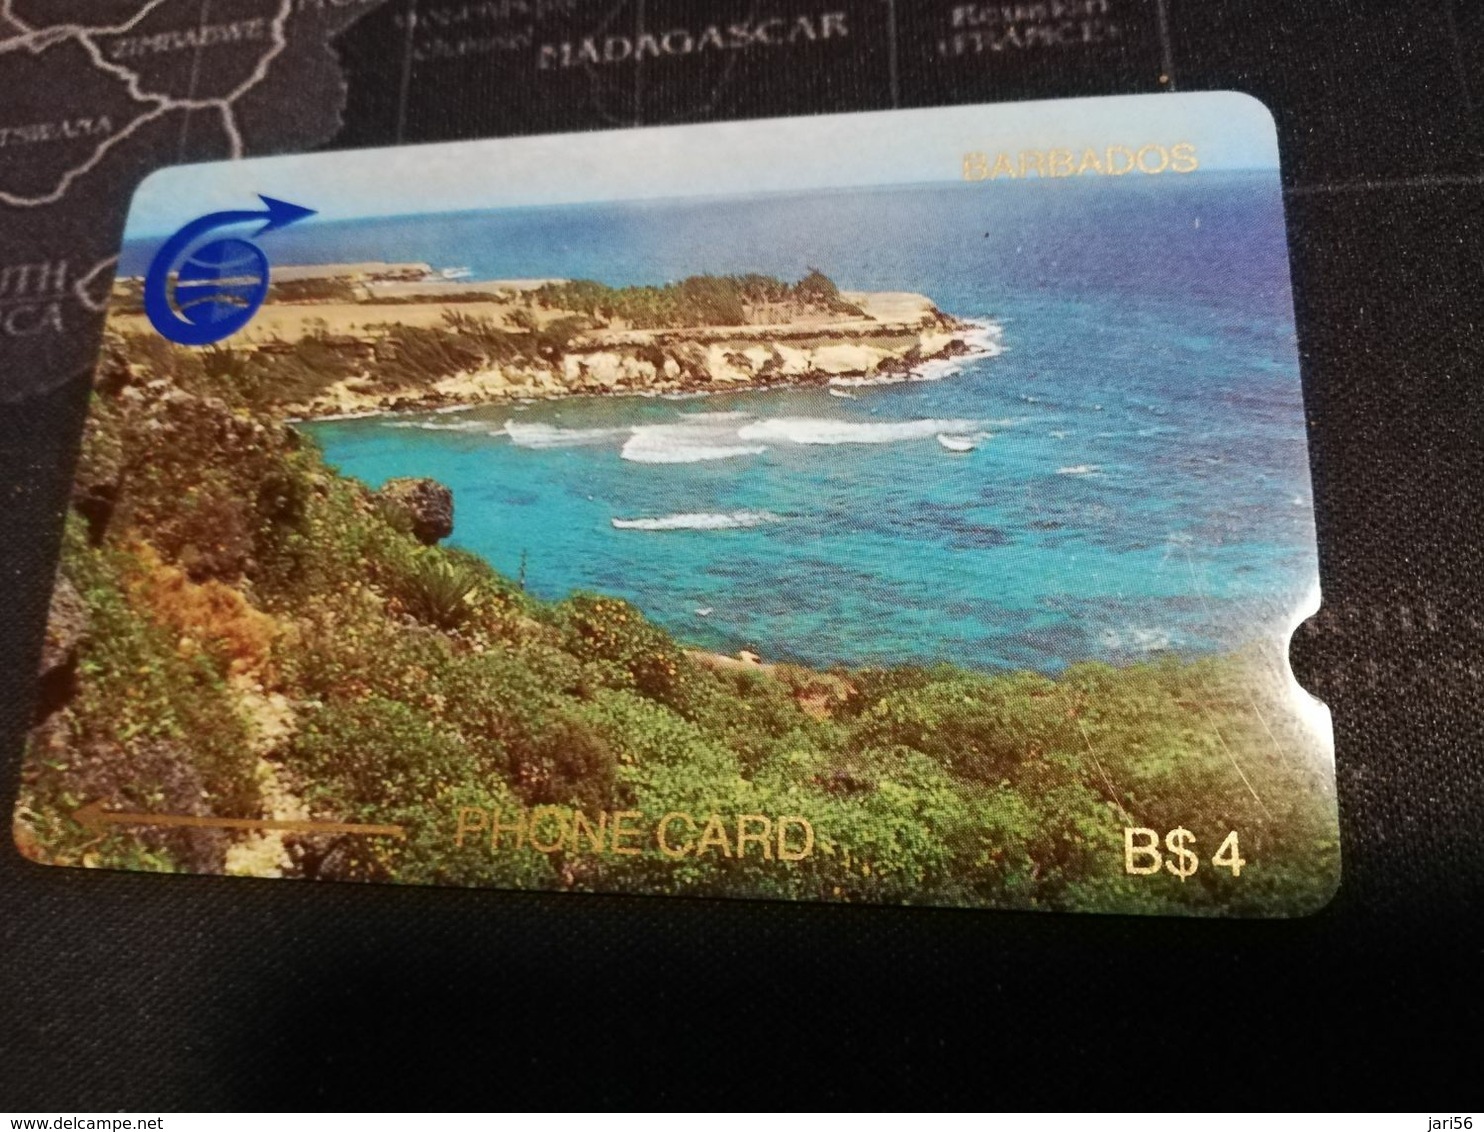 BARBADOS   $4- Gpt Magnetic     BAR-1A 1CBDA   COASTLINE   MINT  Card  ** 2856** RR - Barbados